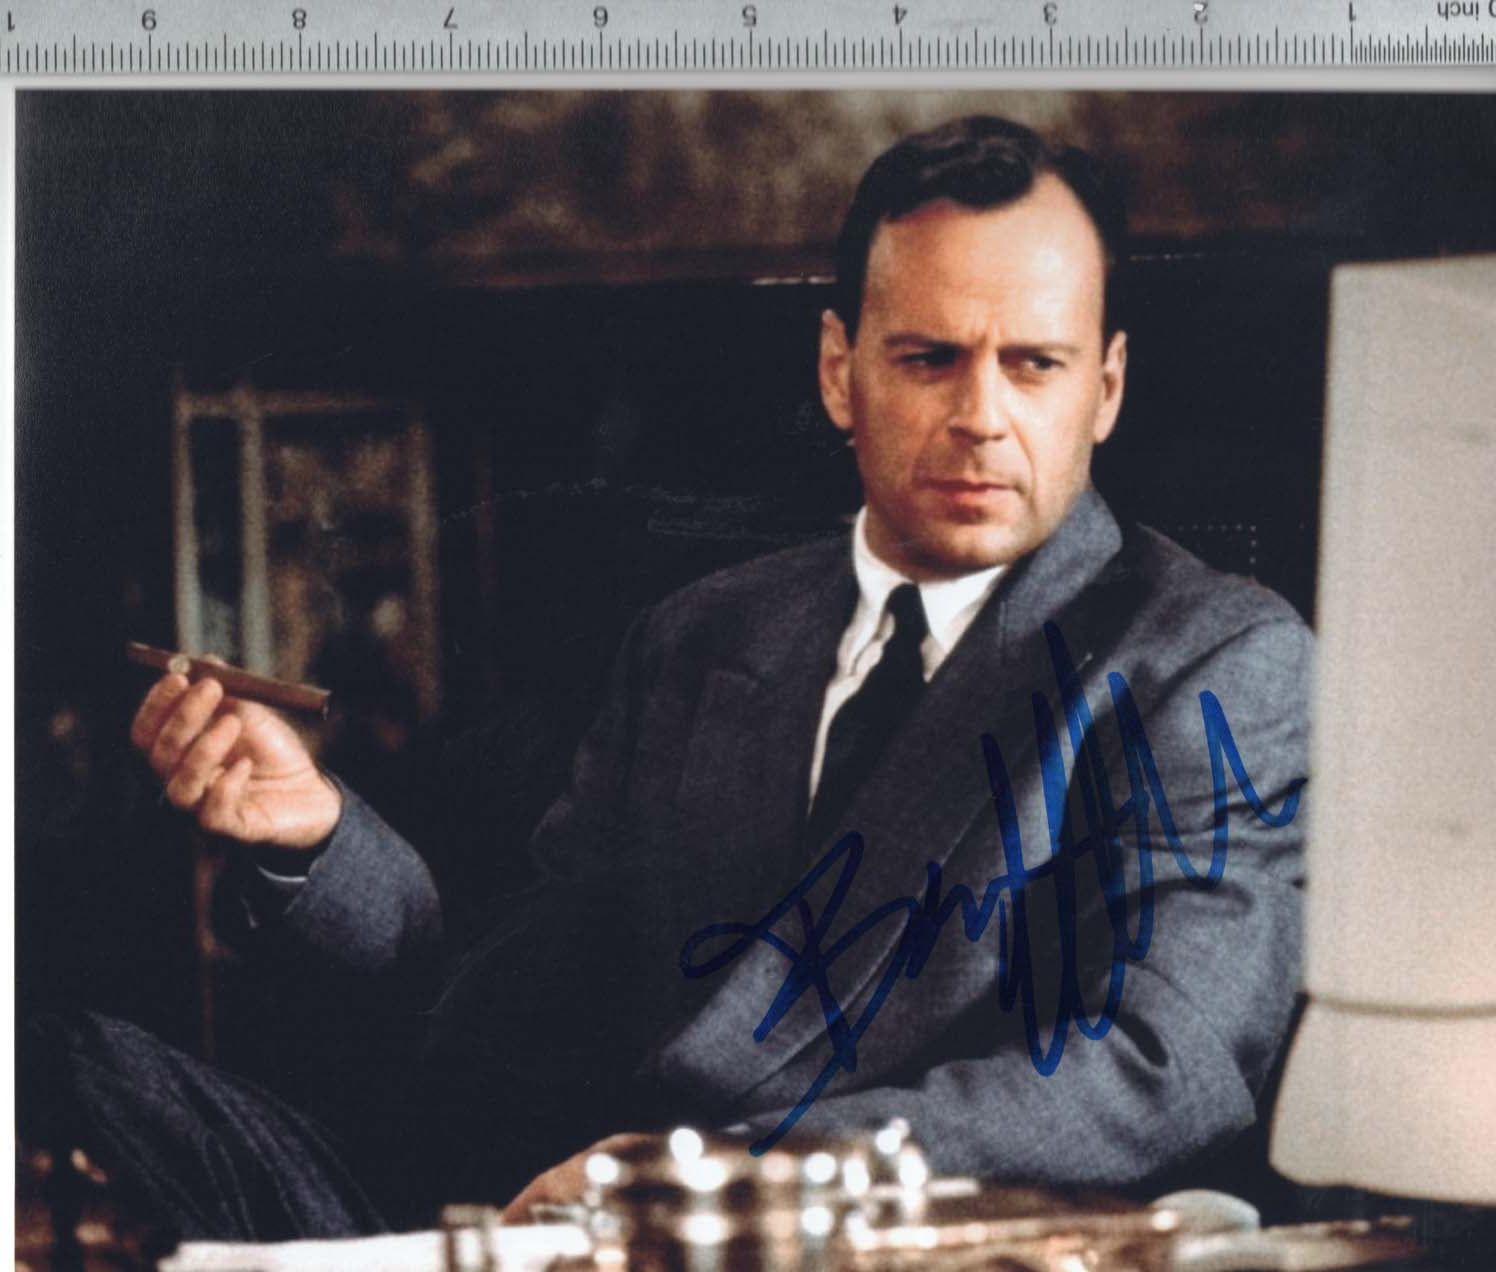 Bruce Willis Autograph Autogramm | ID 8524137300117